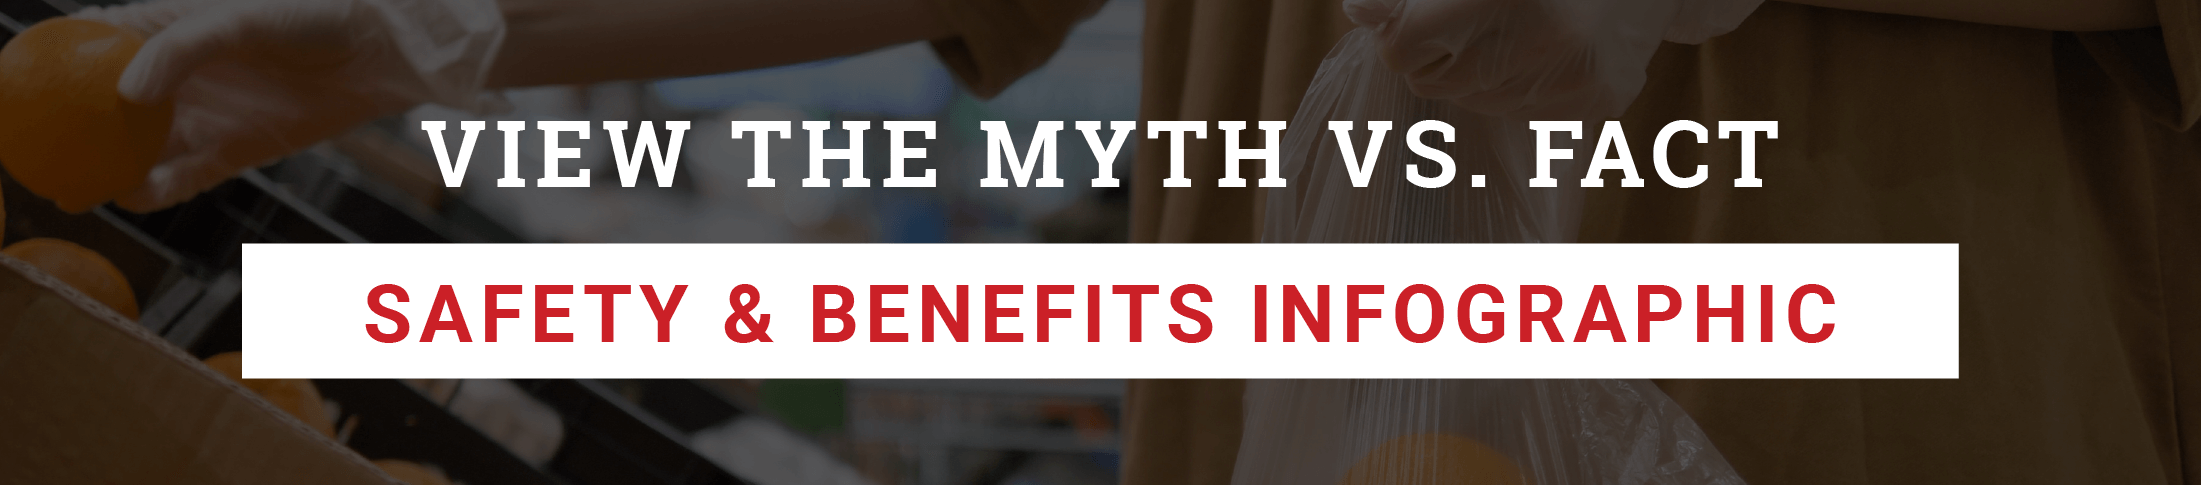 myth vs fact graphic